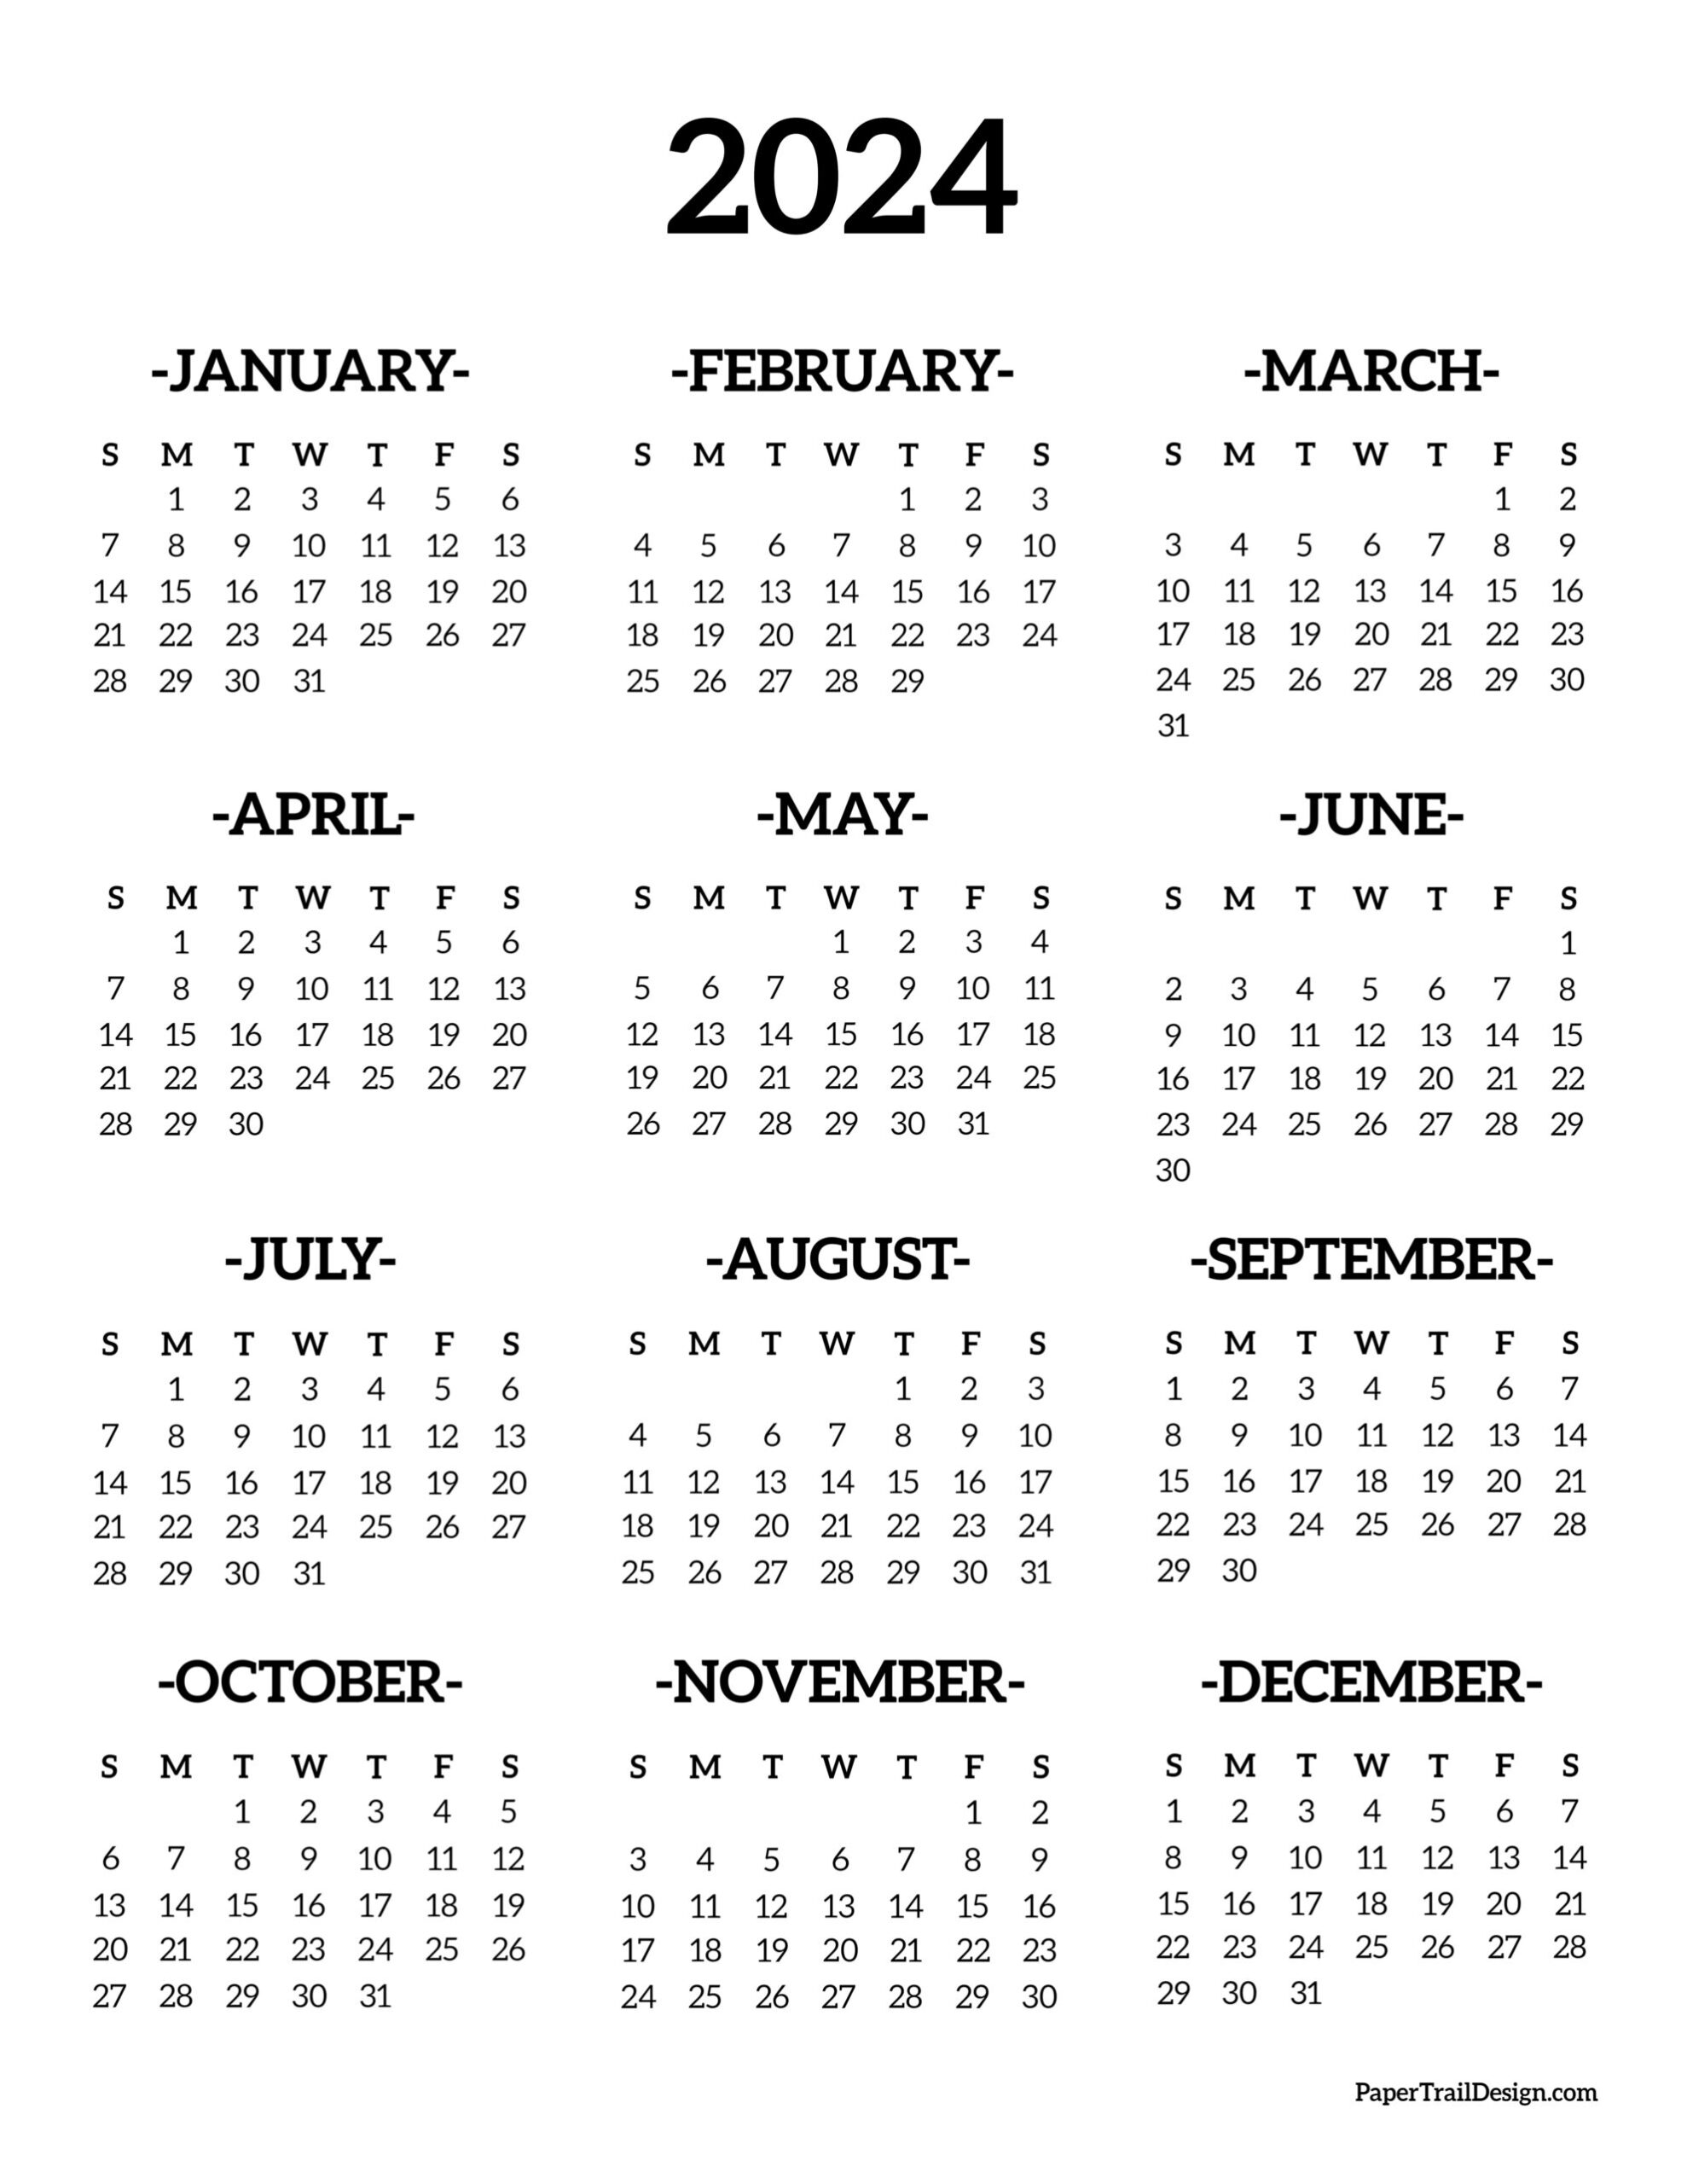 Calendar 2024 Printable One Page - Paper Trail Design for Printable 2024 Annual Calendar